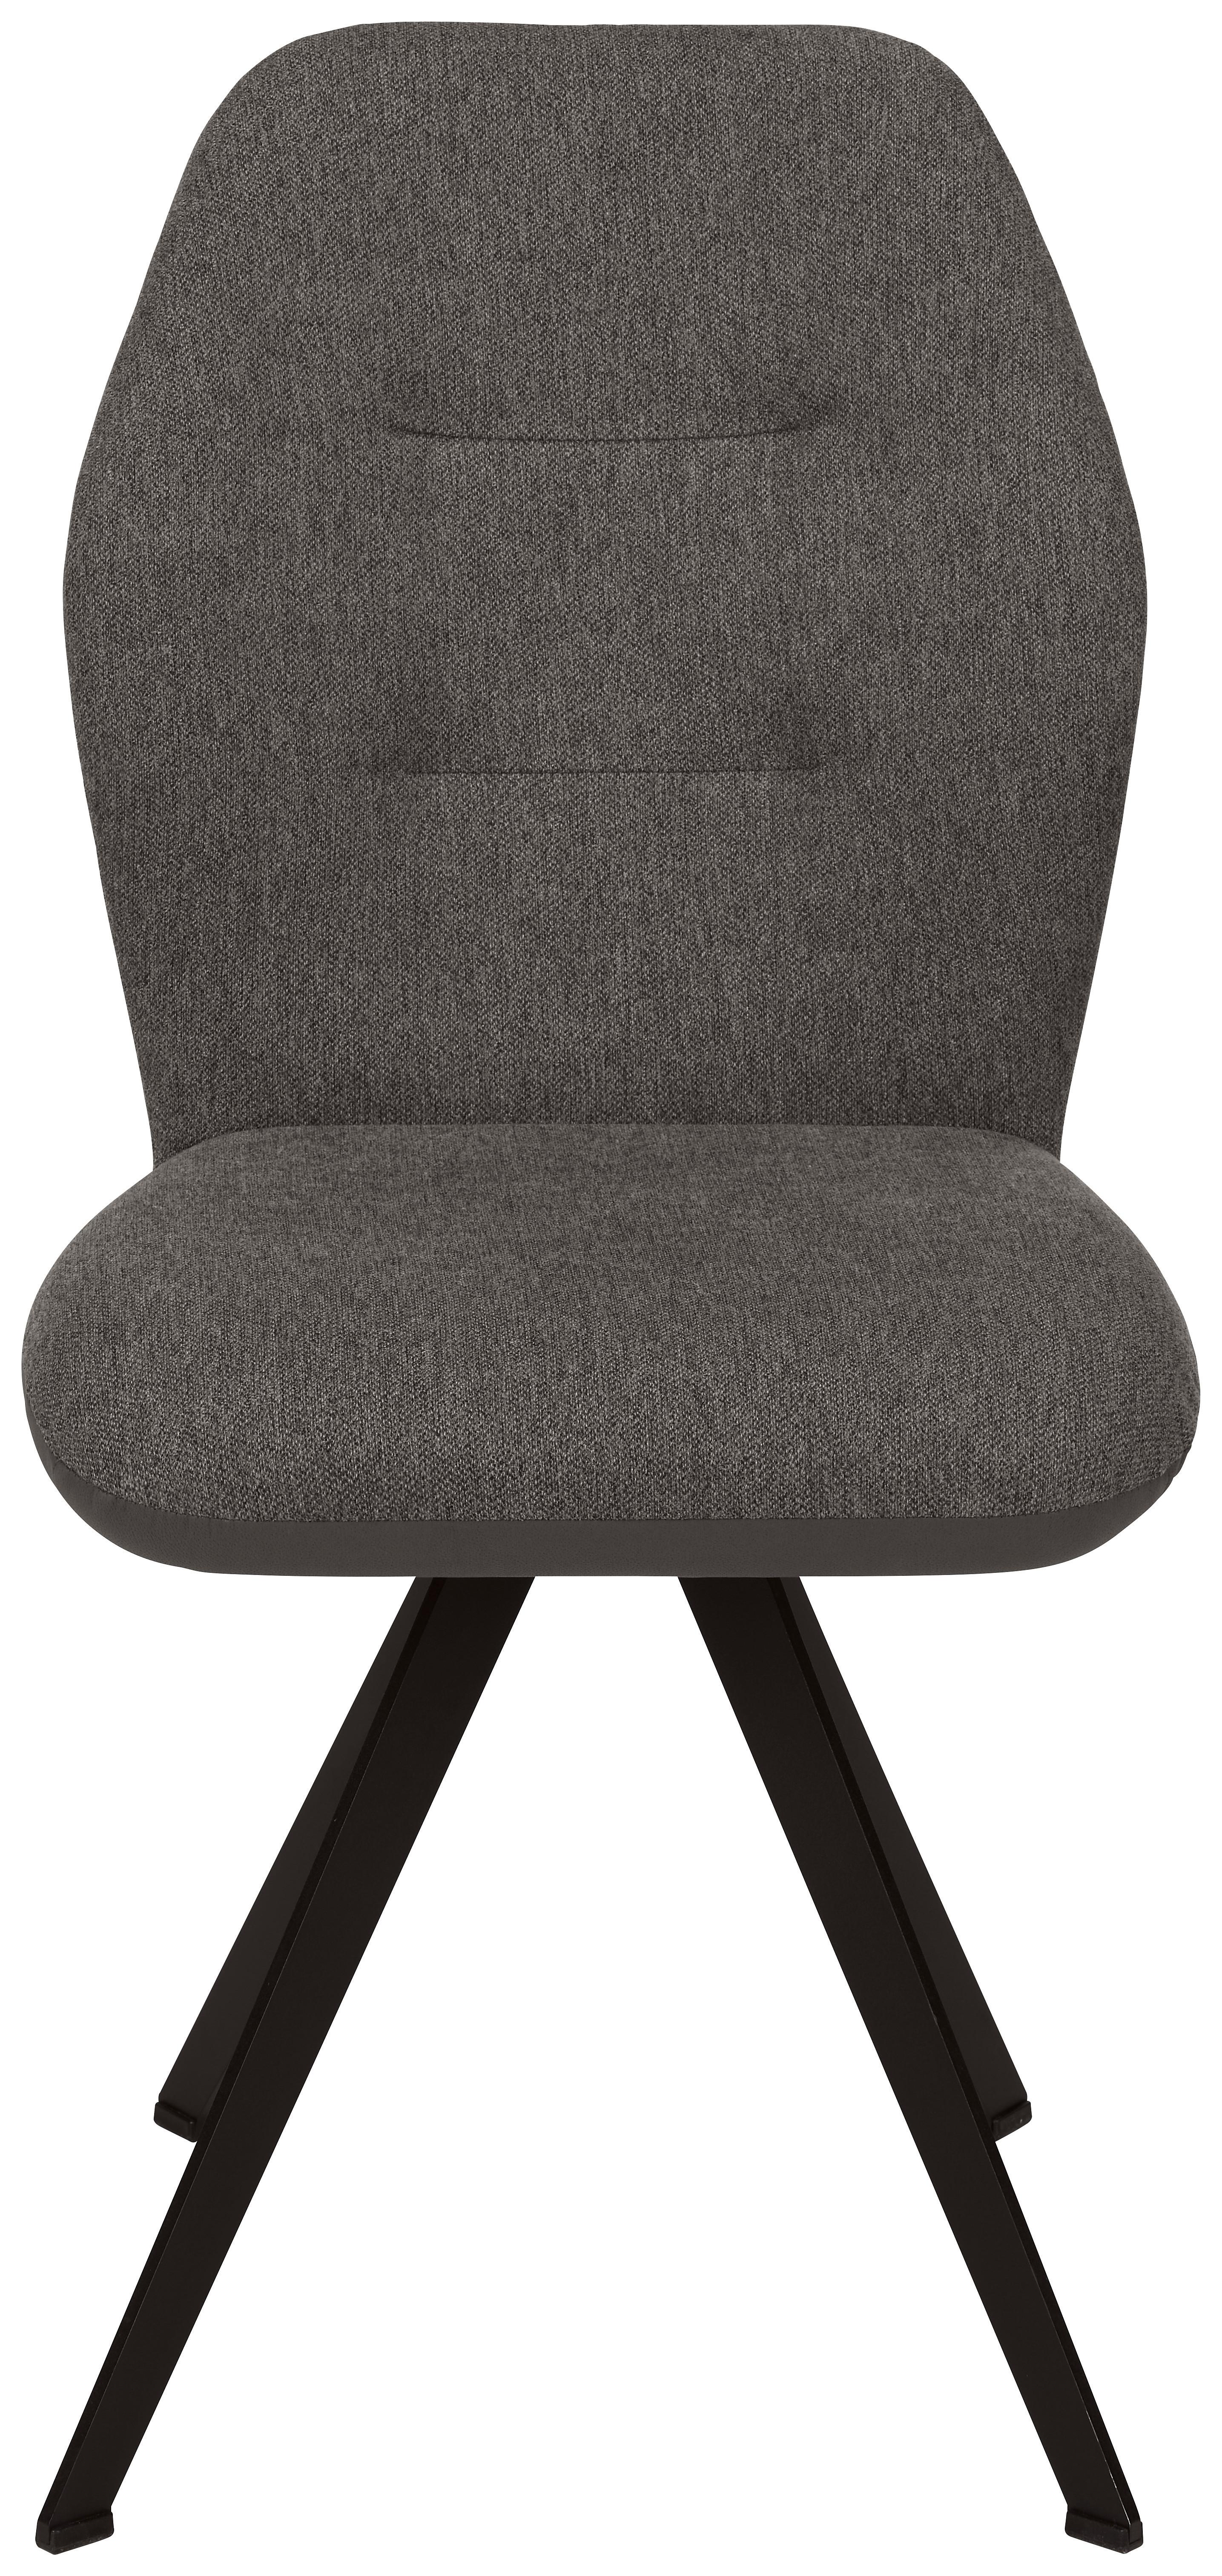 Stuhl in Dunkelgrau - Dunkelgrau/Schwarz, MODERN, Textil/Metall (48/63/96,5cm) - Premium Living